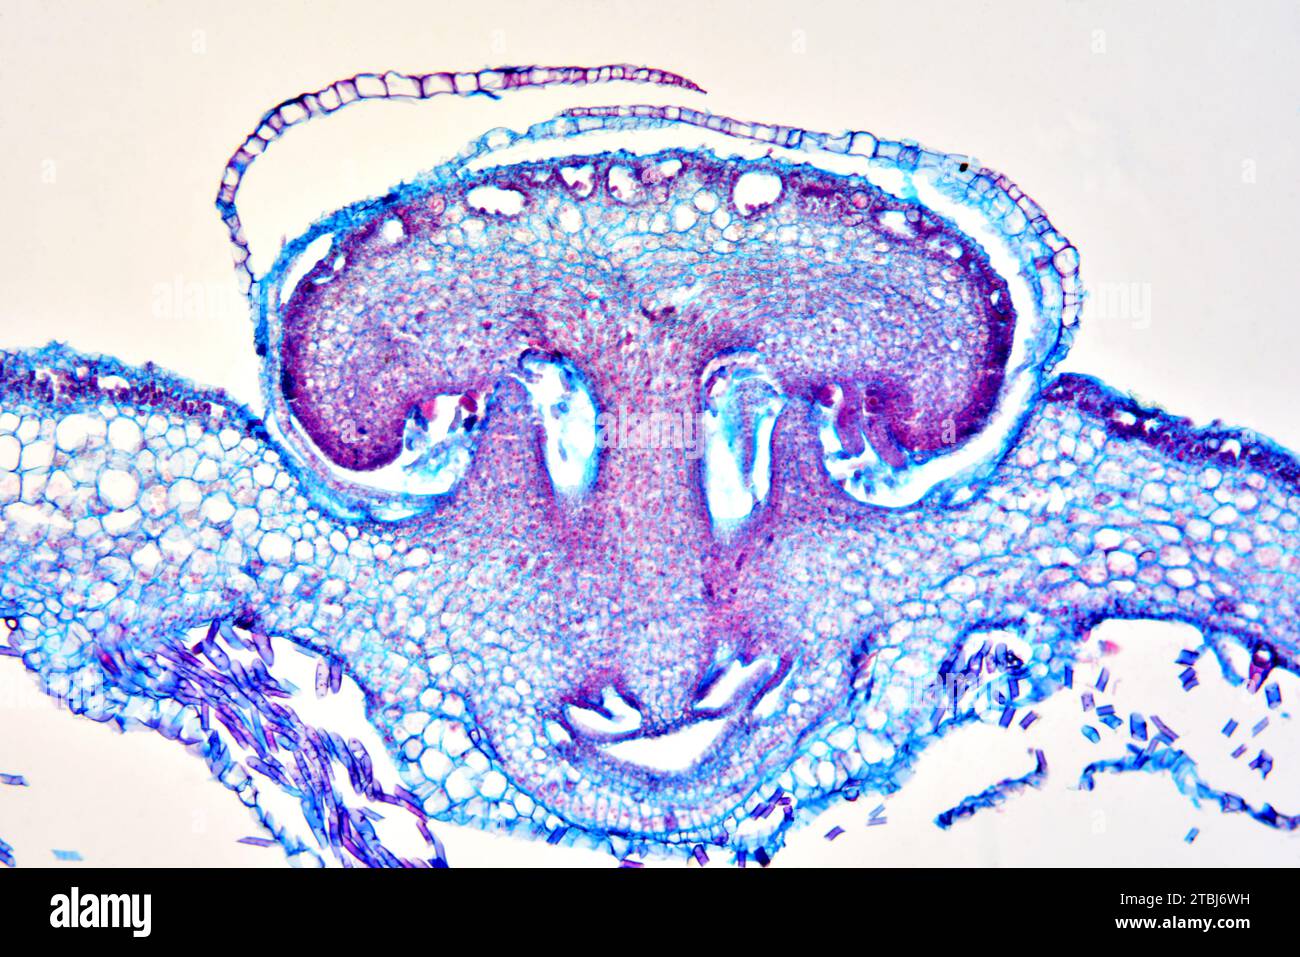 Archegonium of Marchantia sp. a liverwort. Optical microscope X100. Stock Photo